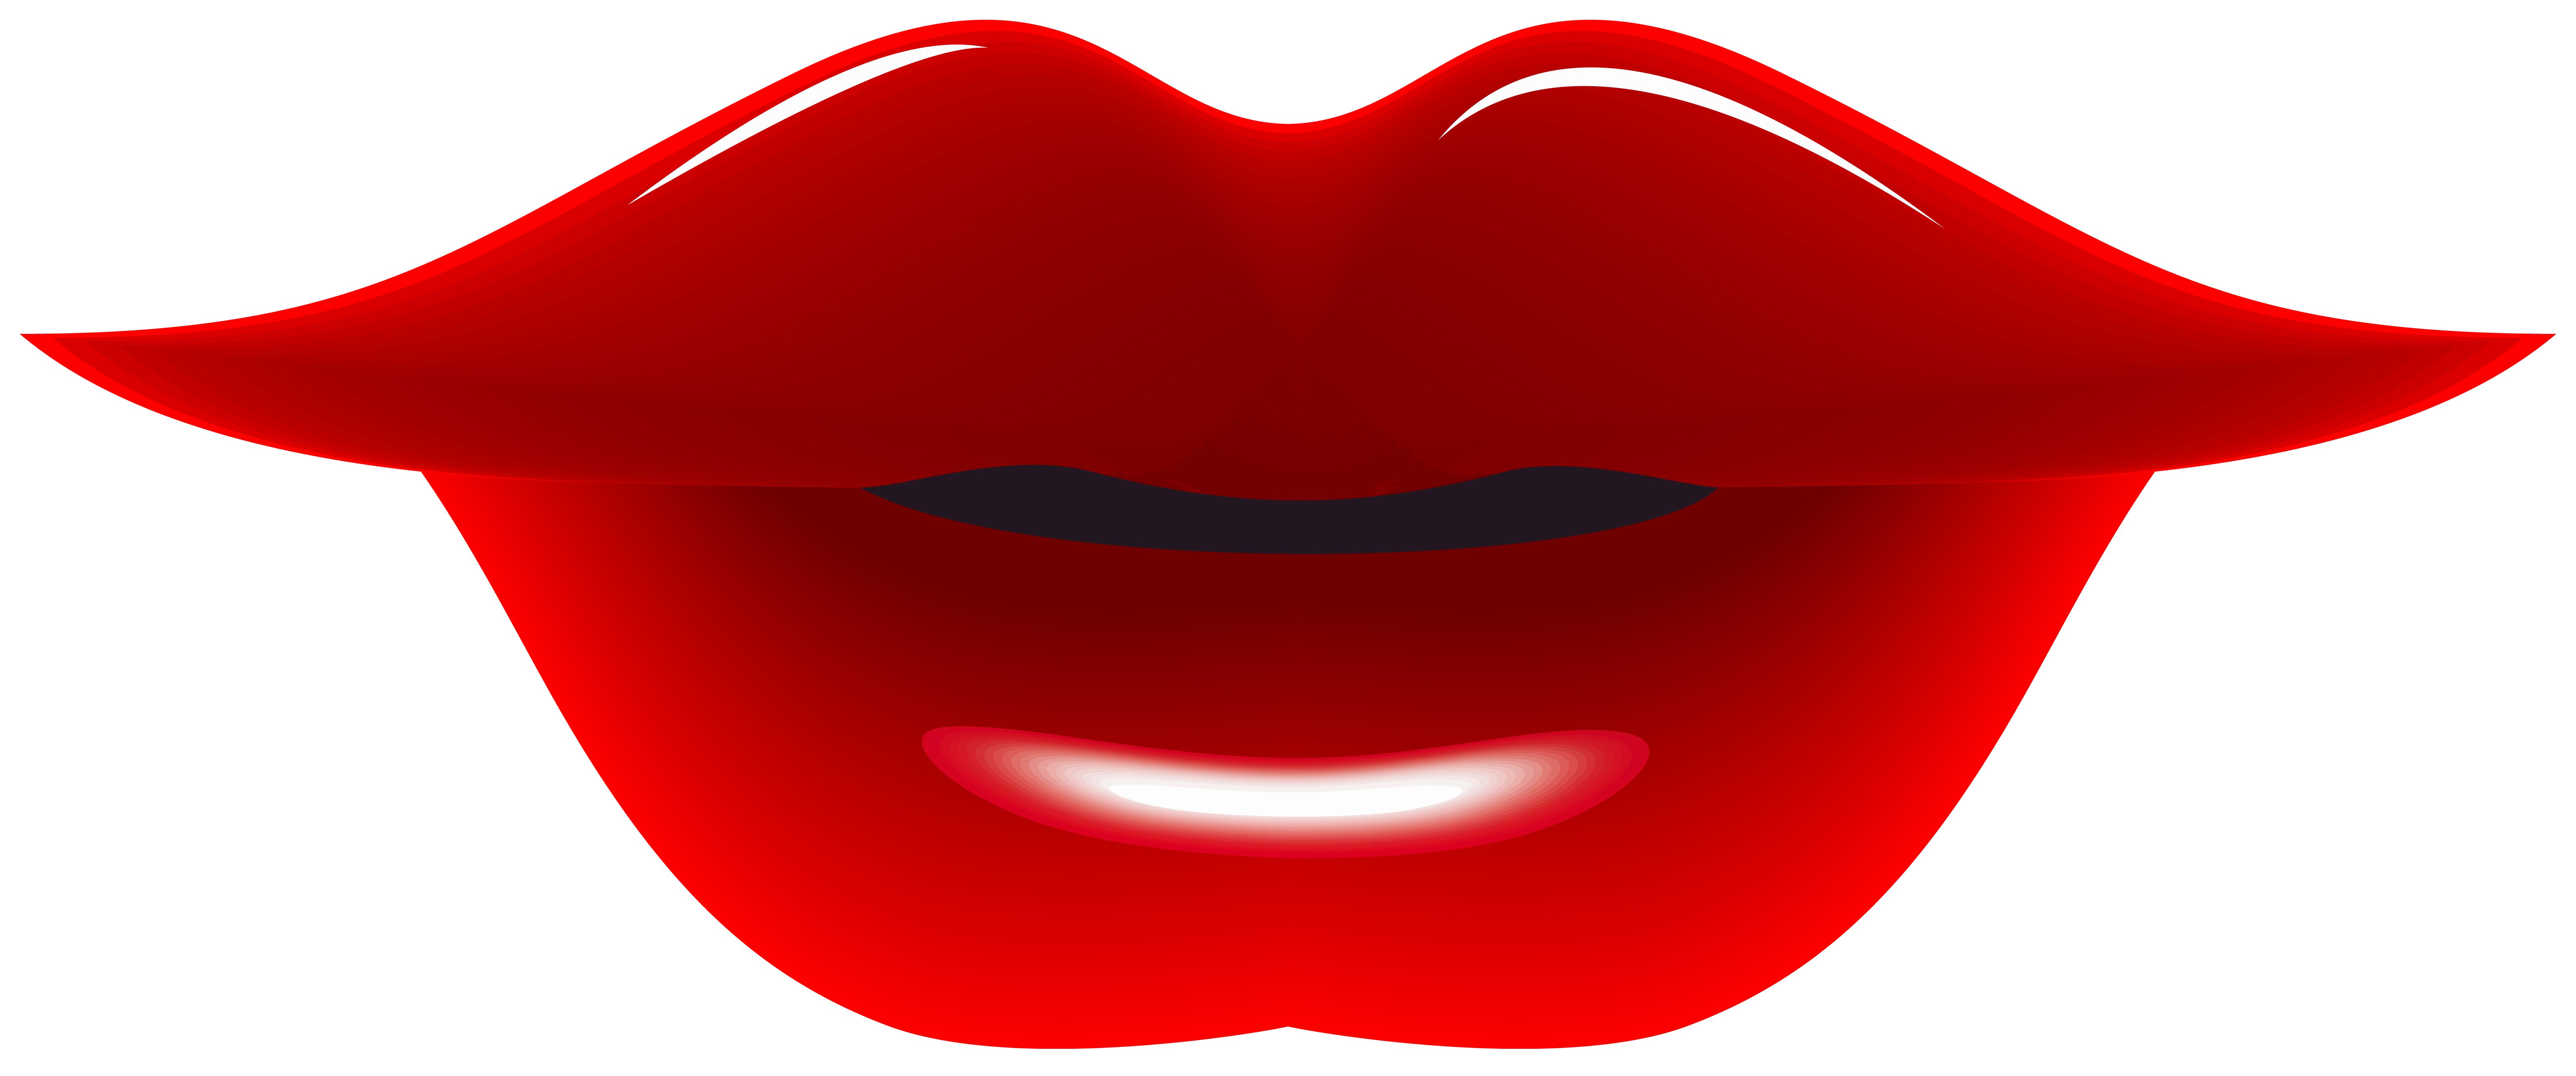 Woman Lips Clipart Clip art of Lips Clipart #2685 — Clipartwork.